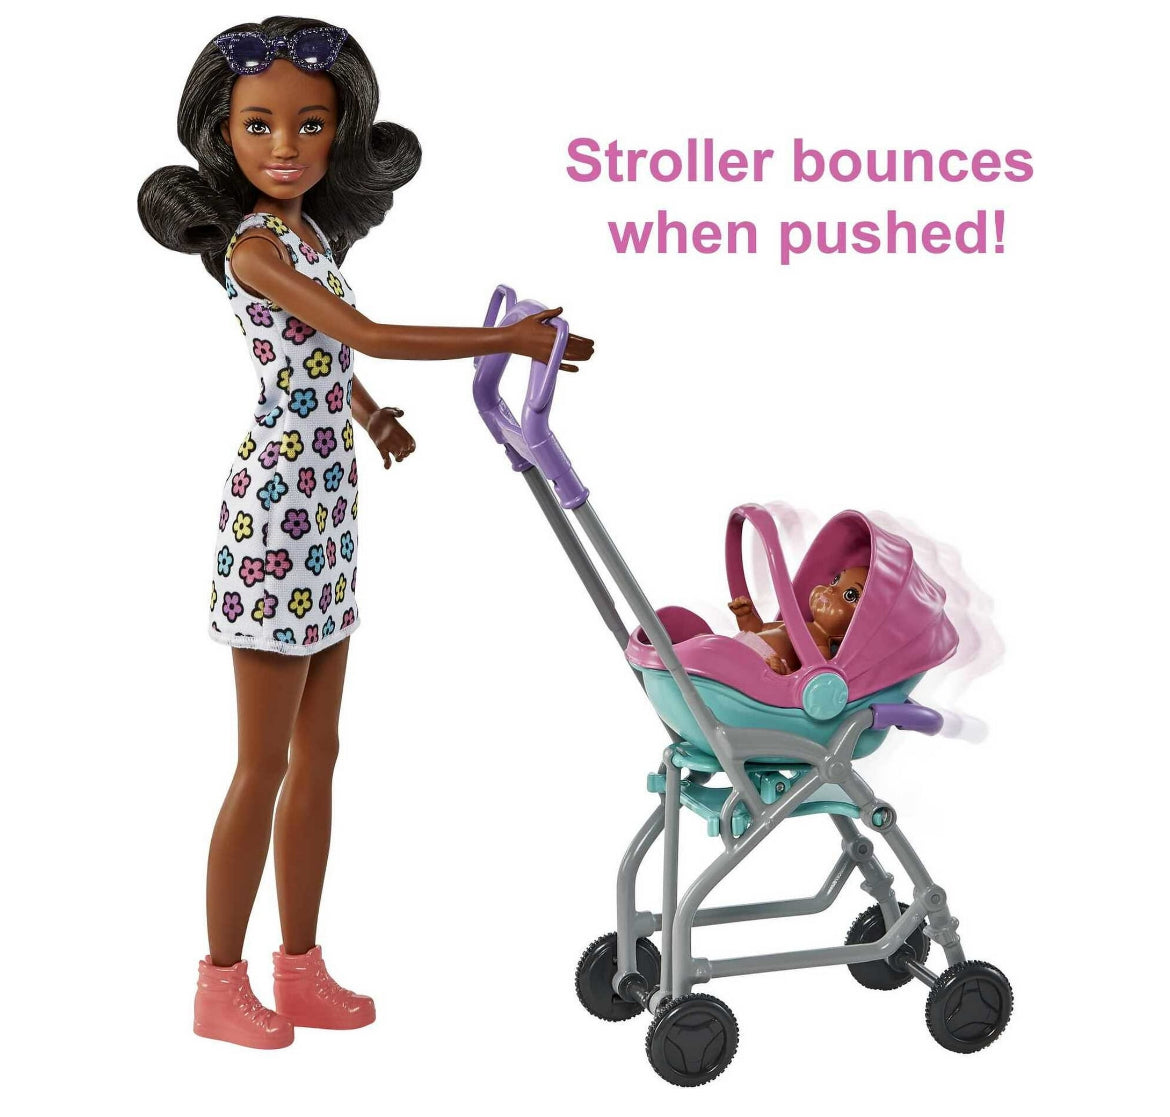 Barbie Skipper Babysitters Inc. Stroller Playset with Babysitter & Baby Dolls, Plus 5 Accessories